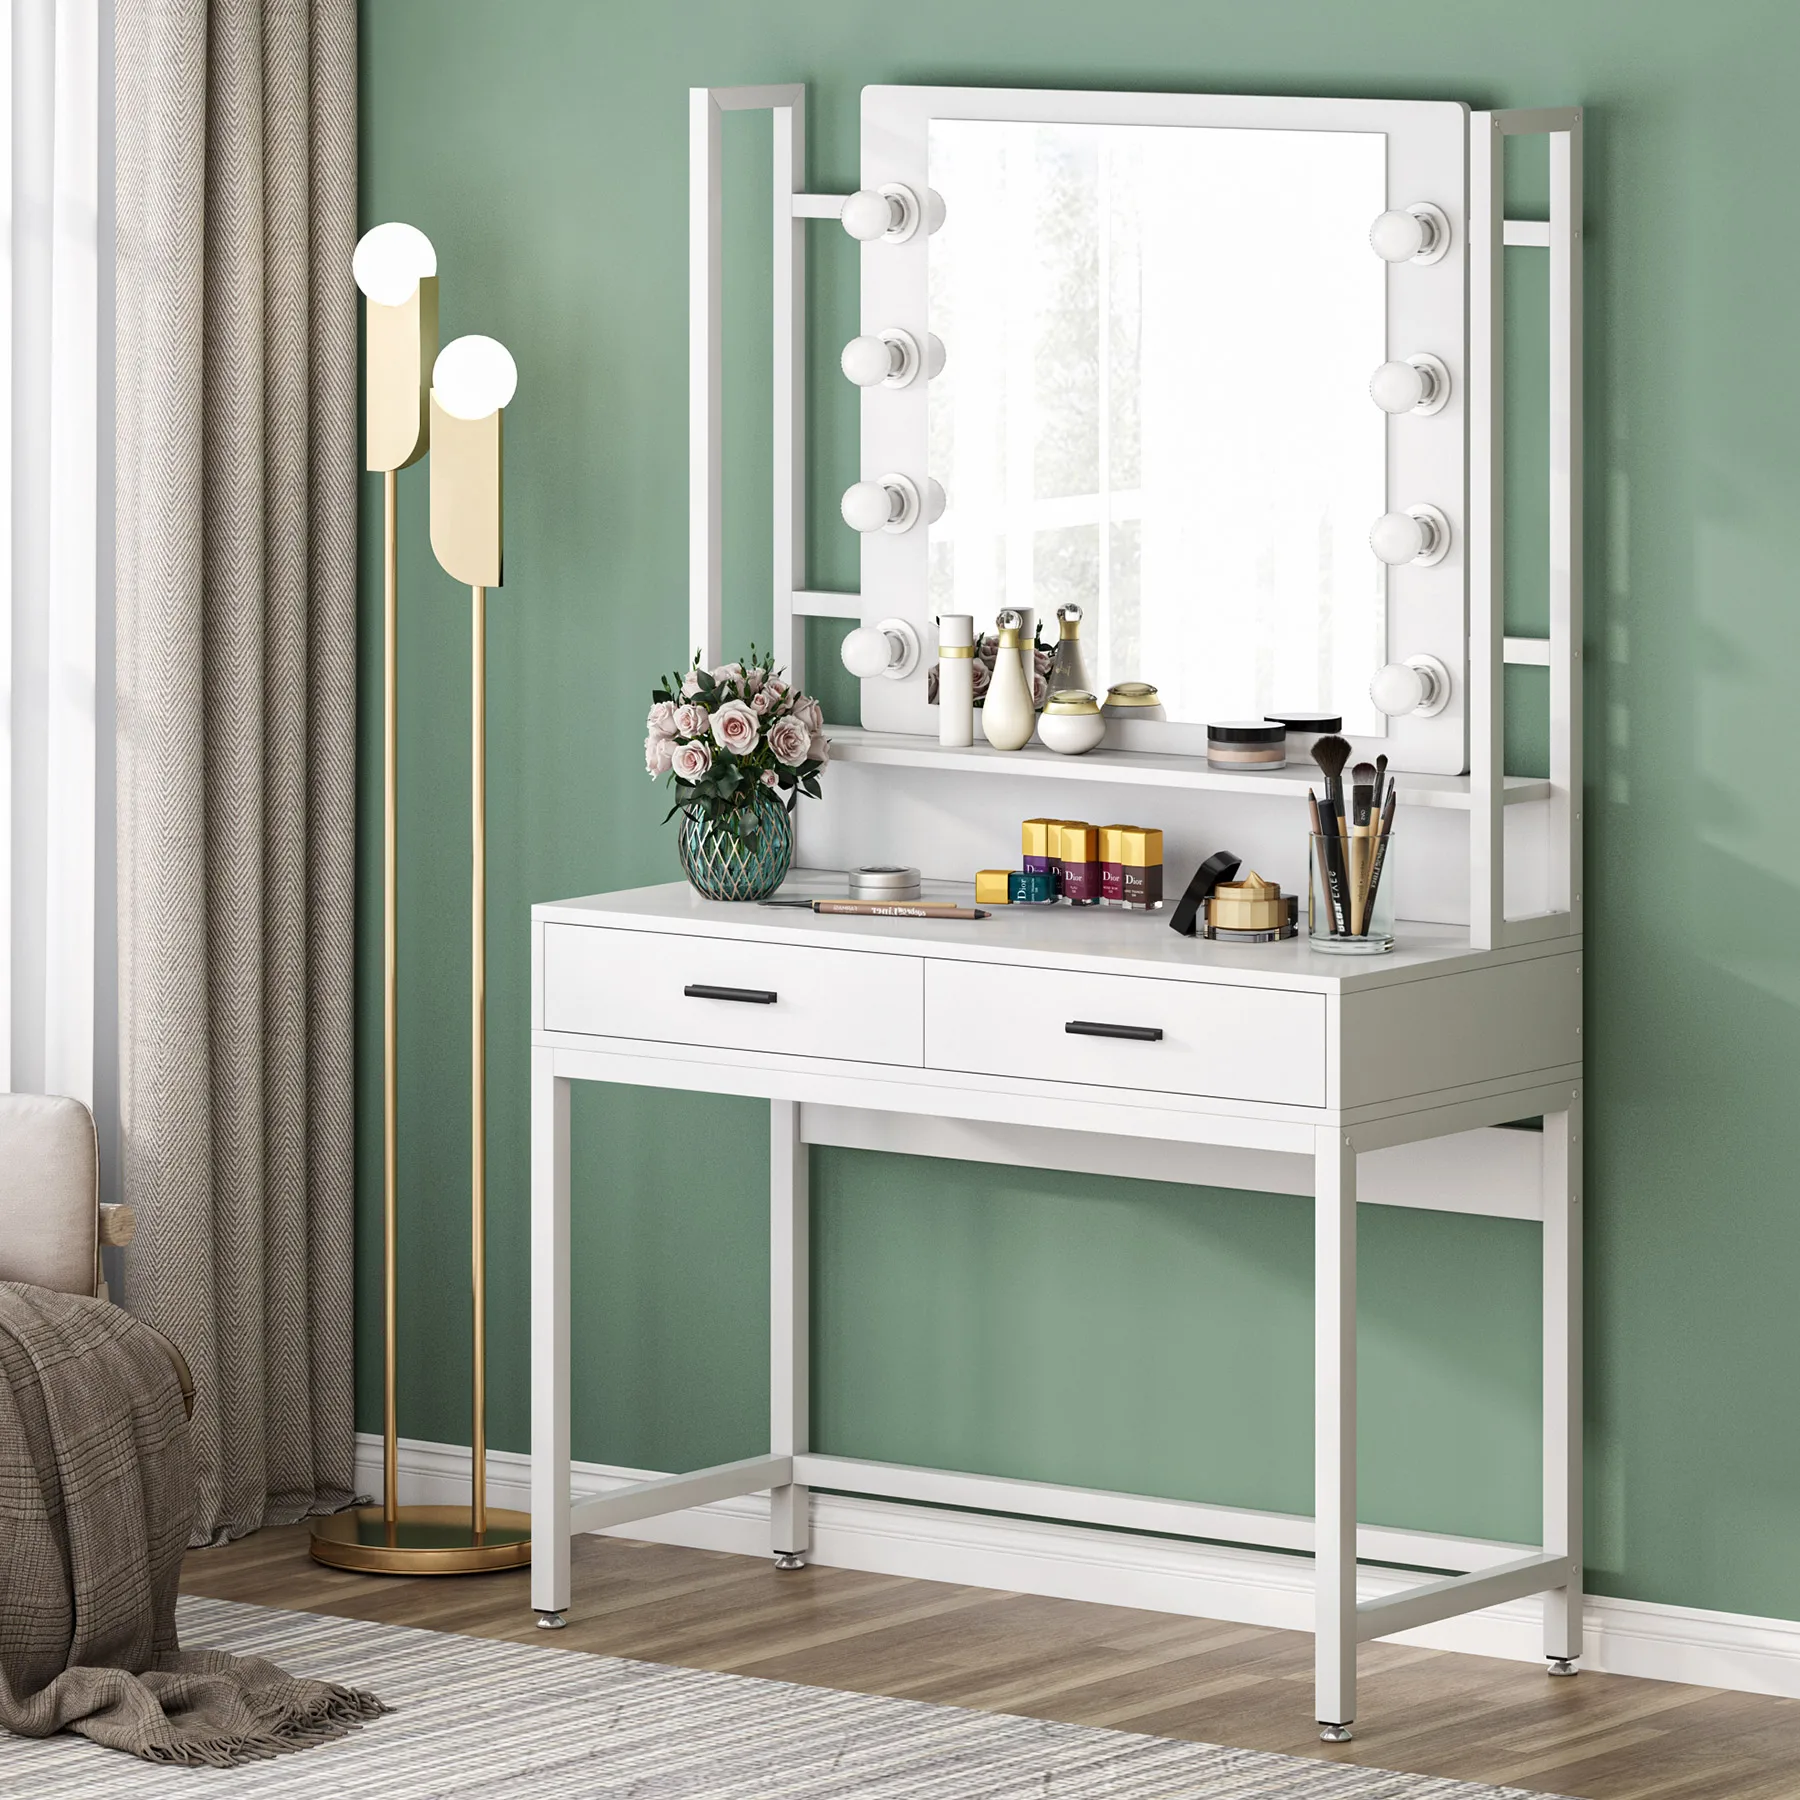 Tribesigns Elegant Makeup White Vanity Desk Dressing Table with Lighted Mirror for Women Girls